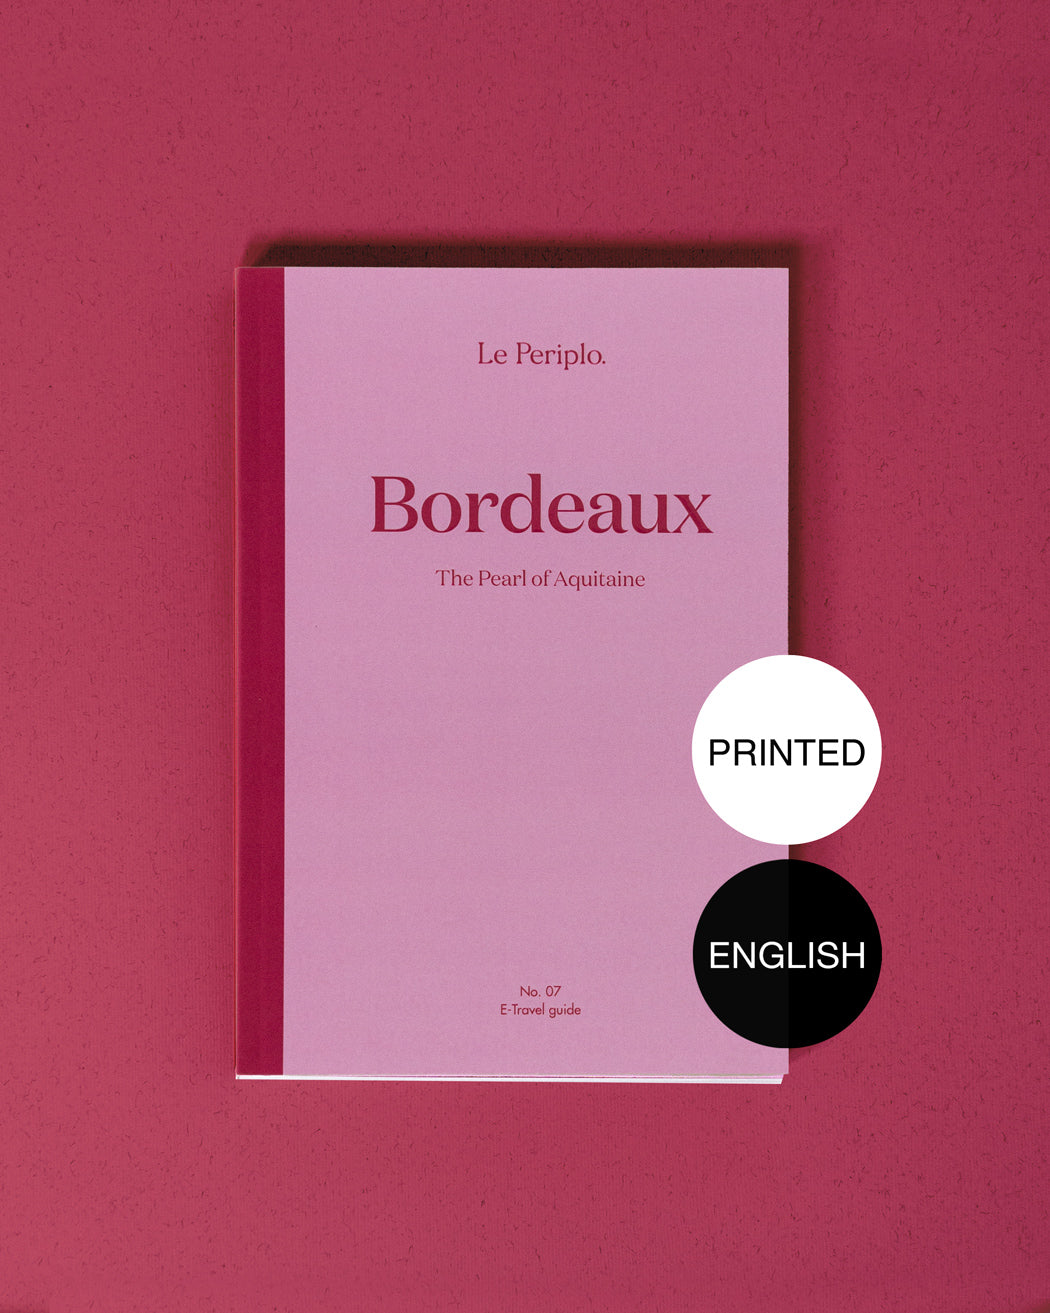 Bordeaux (printed) Spanish version